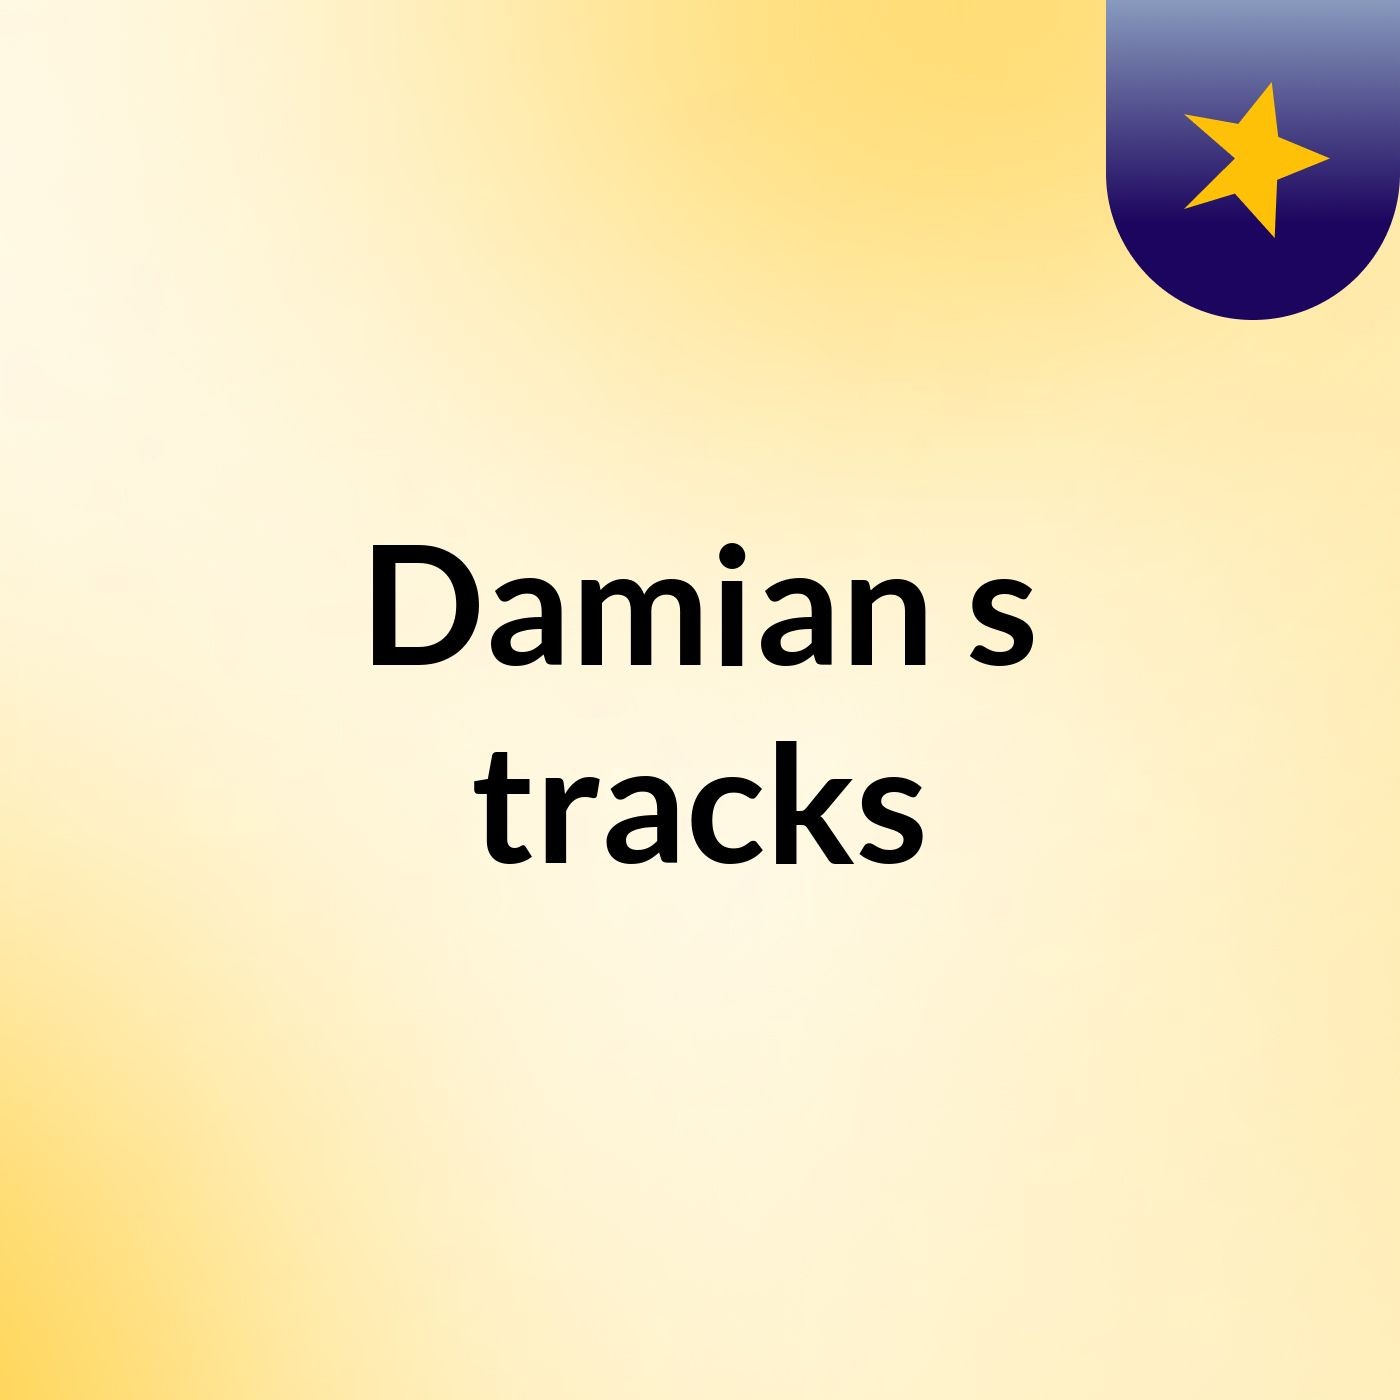 Damian's tracks